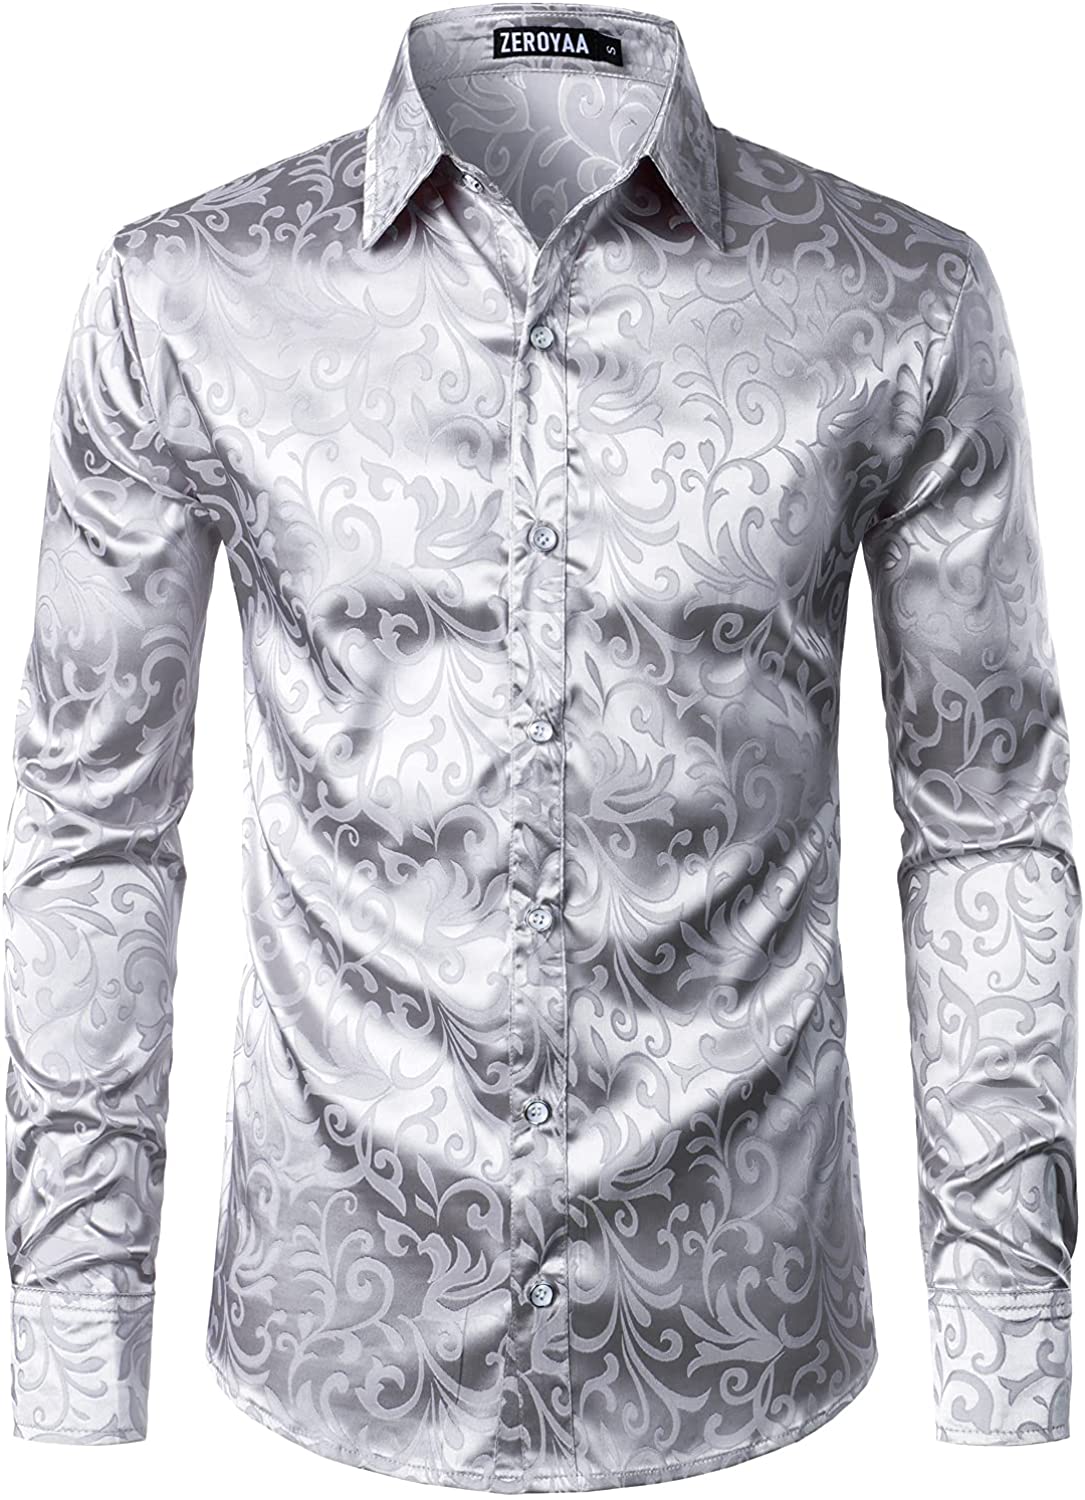 ZEROYAA Men's Luxury Jacquard Long Sleeve Dress Shirt Shiny Satin 